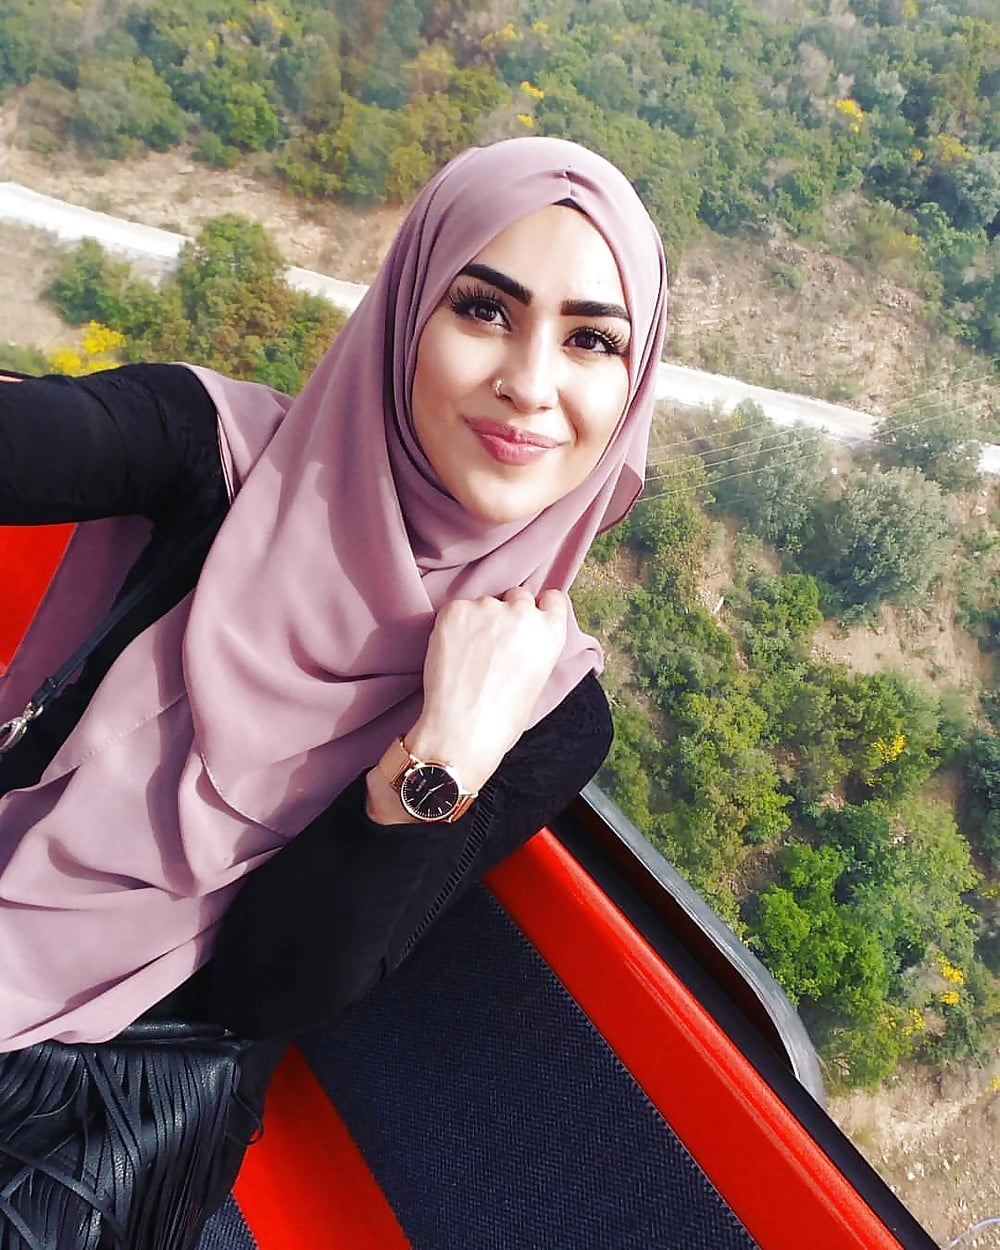 Turkish Girls 16 Special Hijab Turbanli pict gal